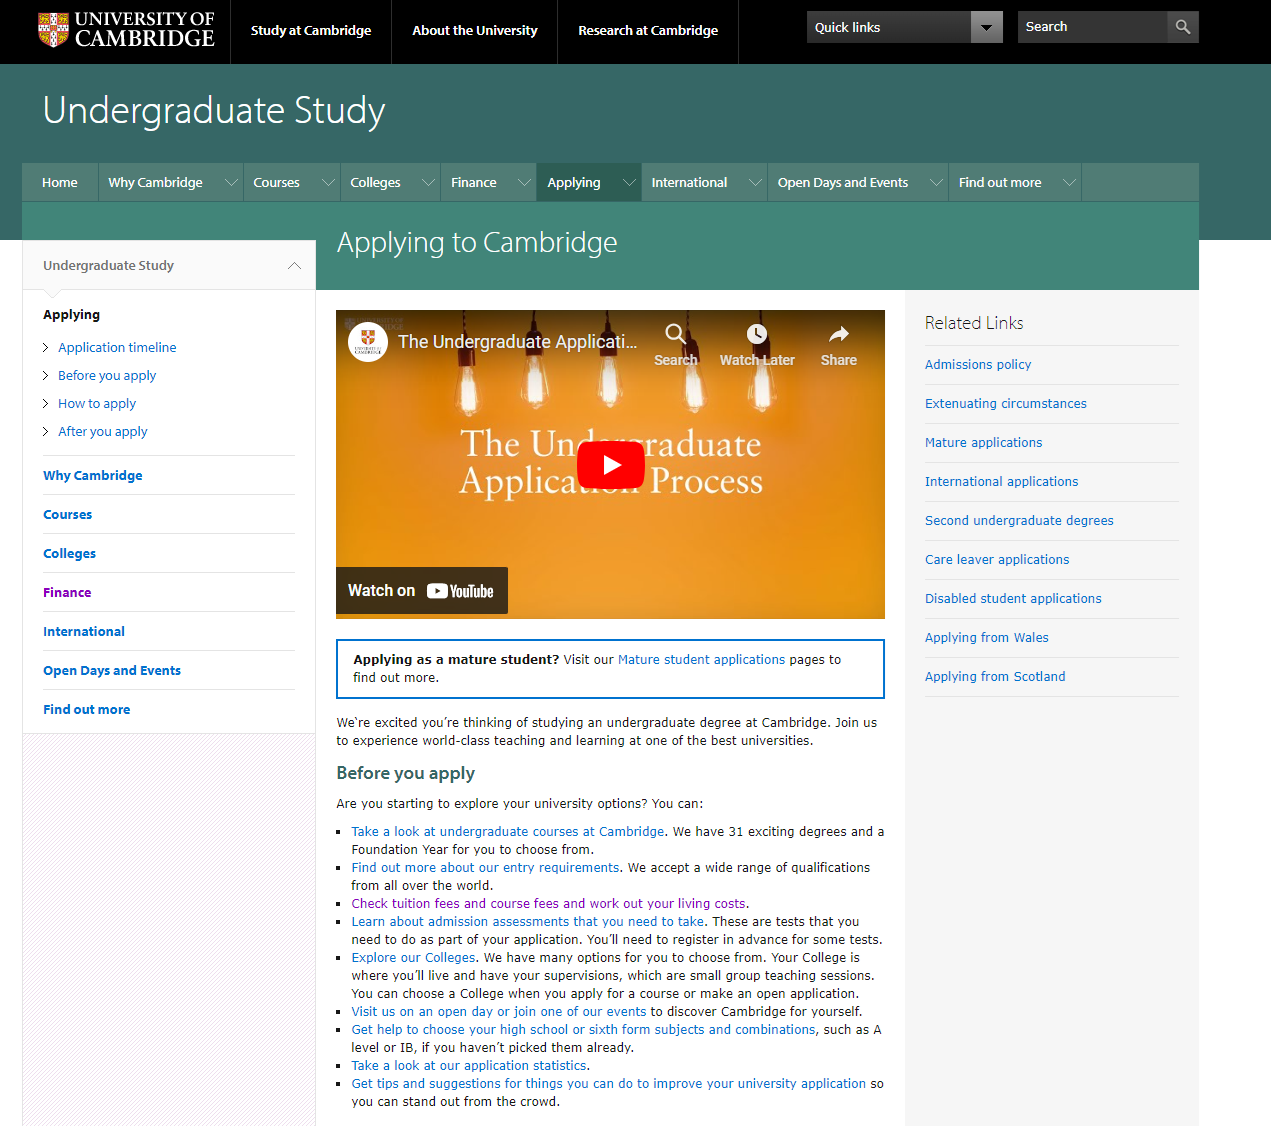 Applying to Cambridge” page on the University of Cambridge website